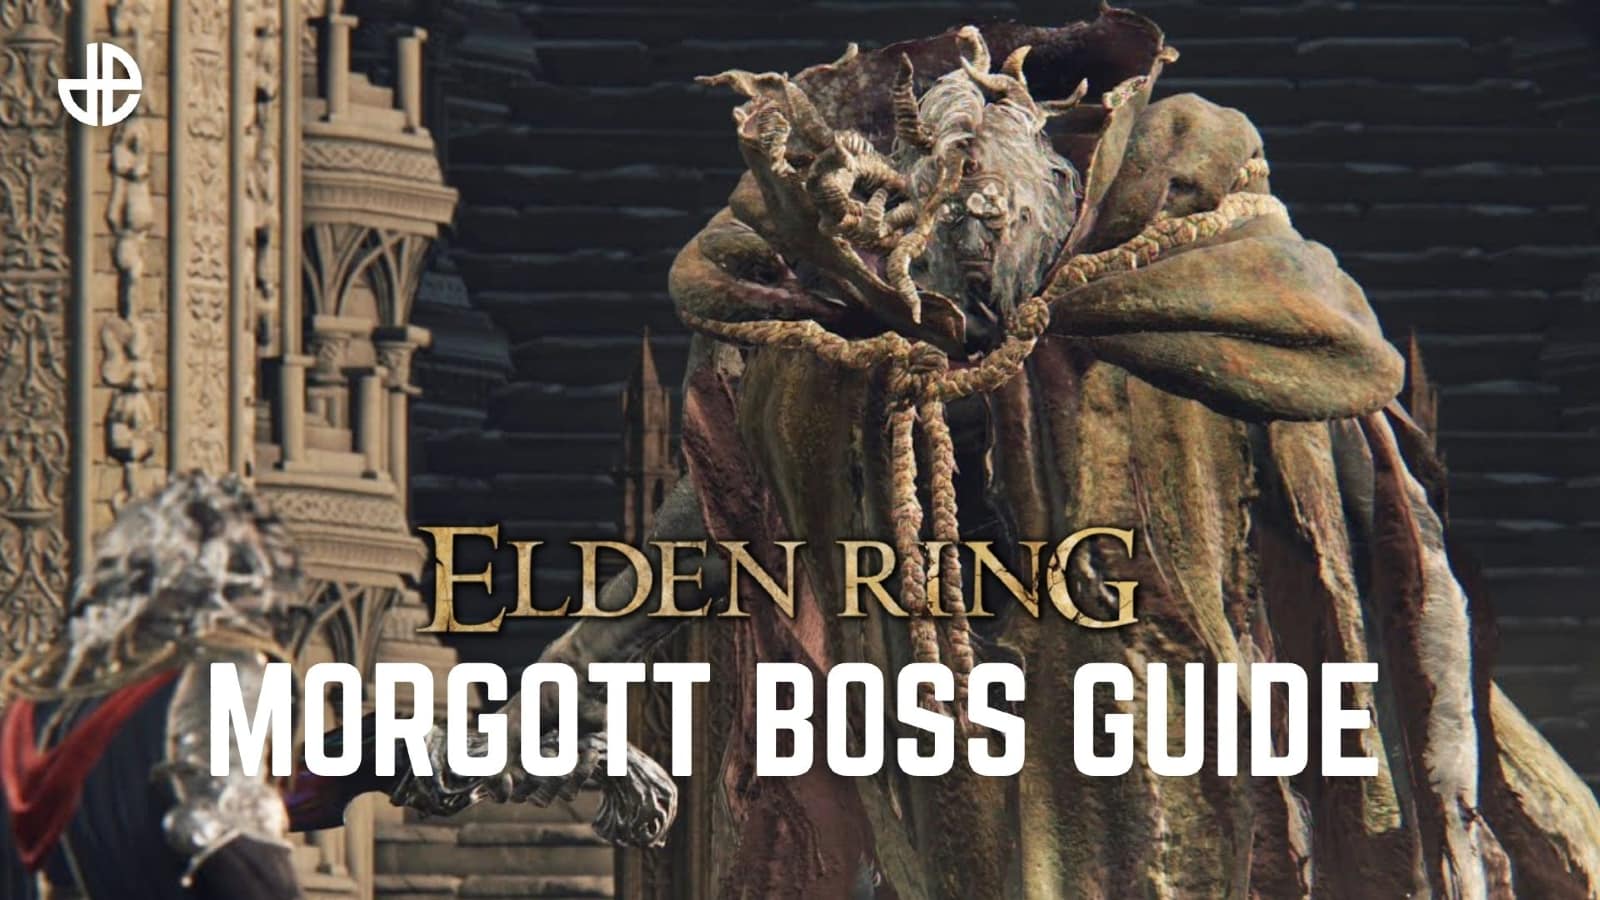 Elden Ring Boss Guide: How To beat Margit, Godrick, Radahn, and